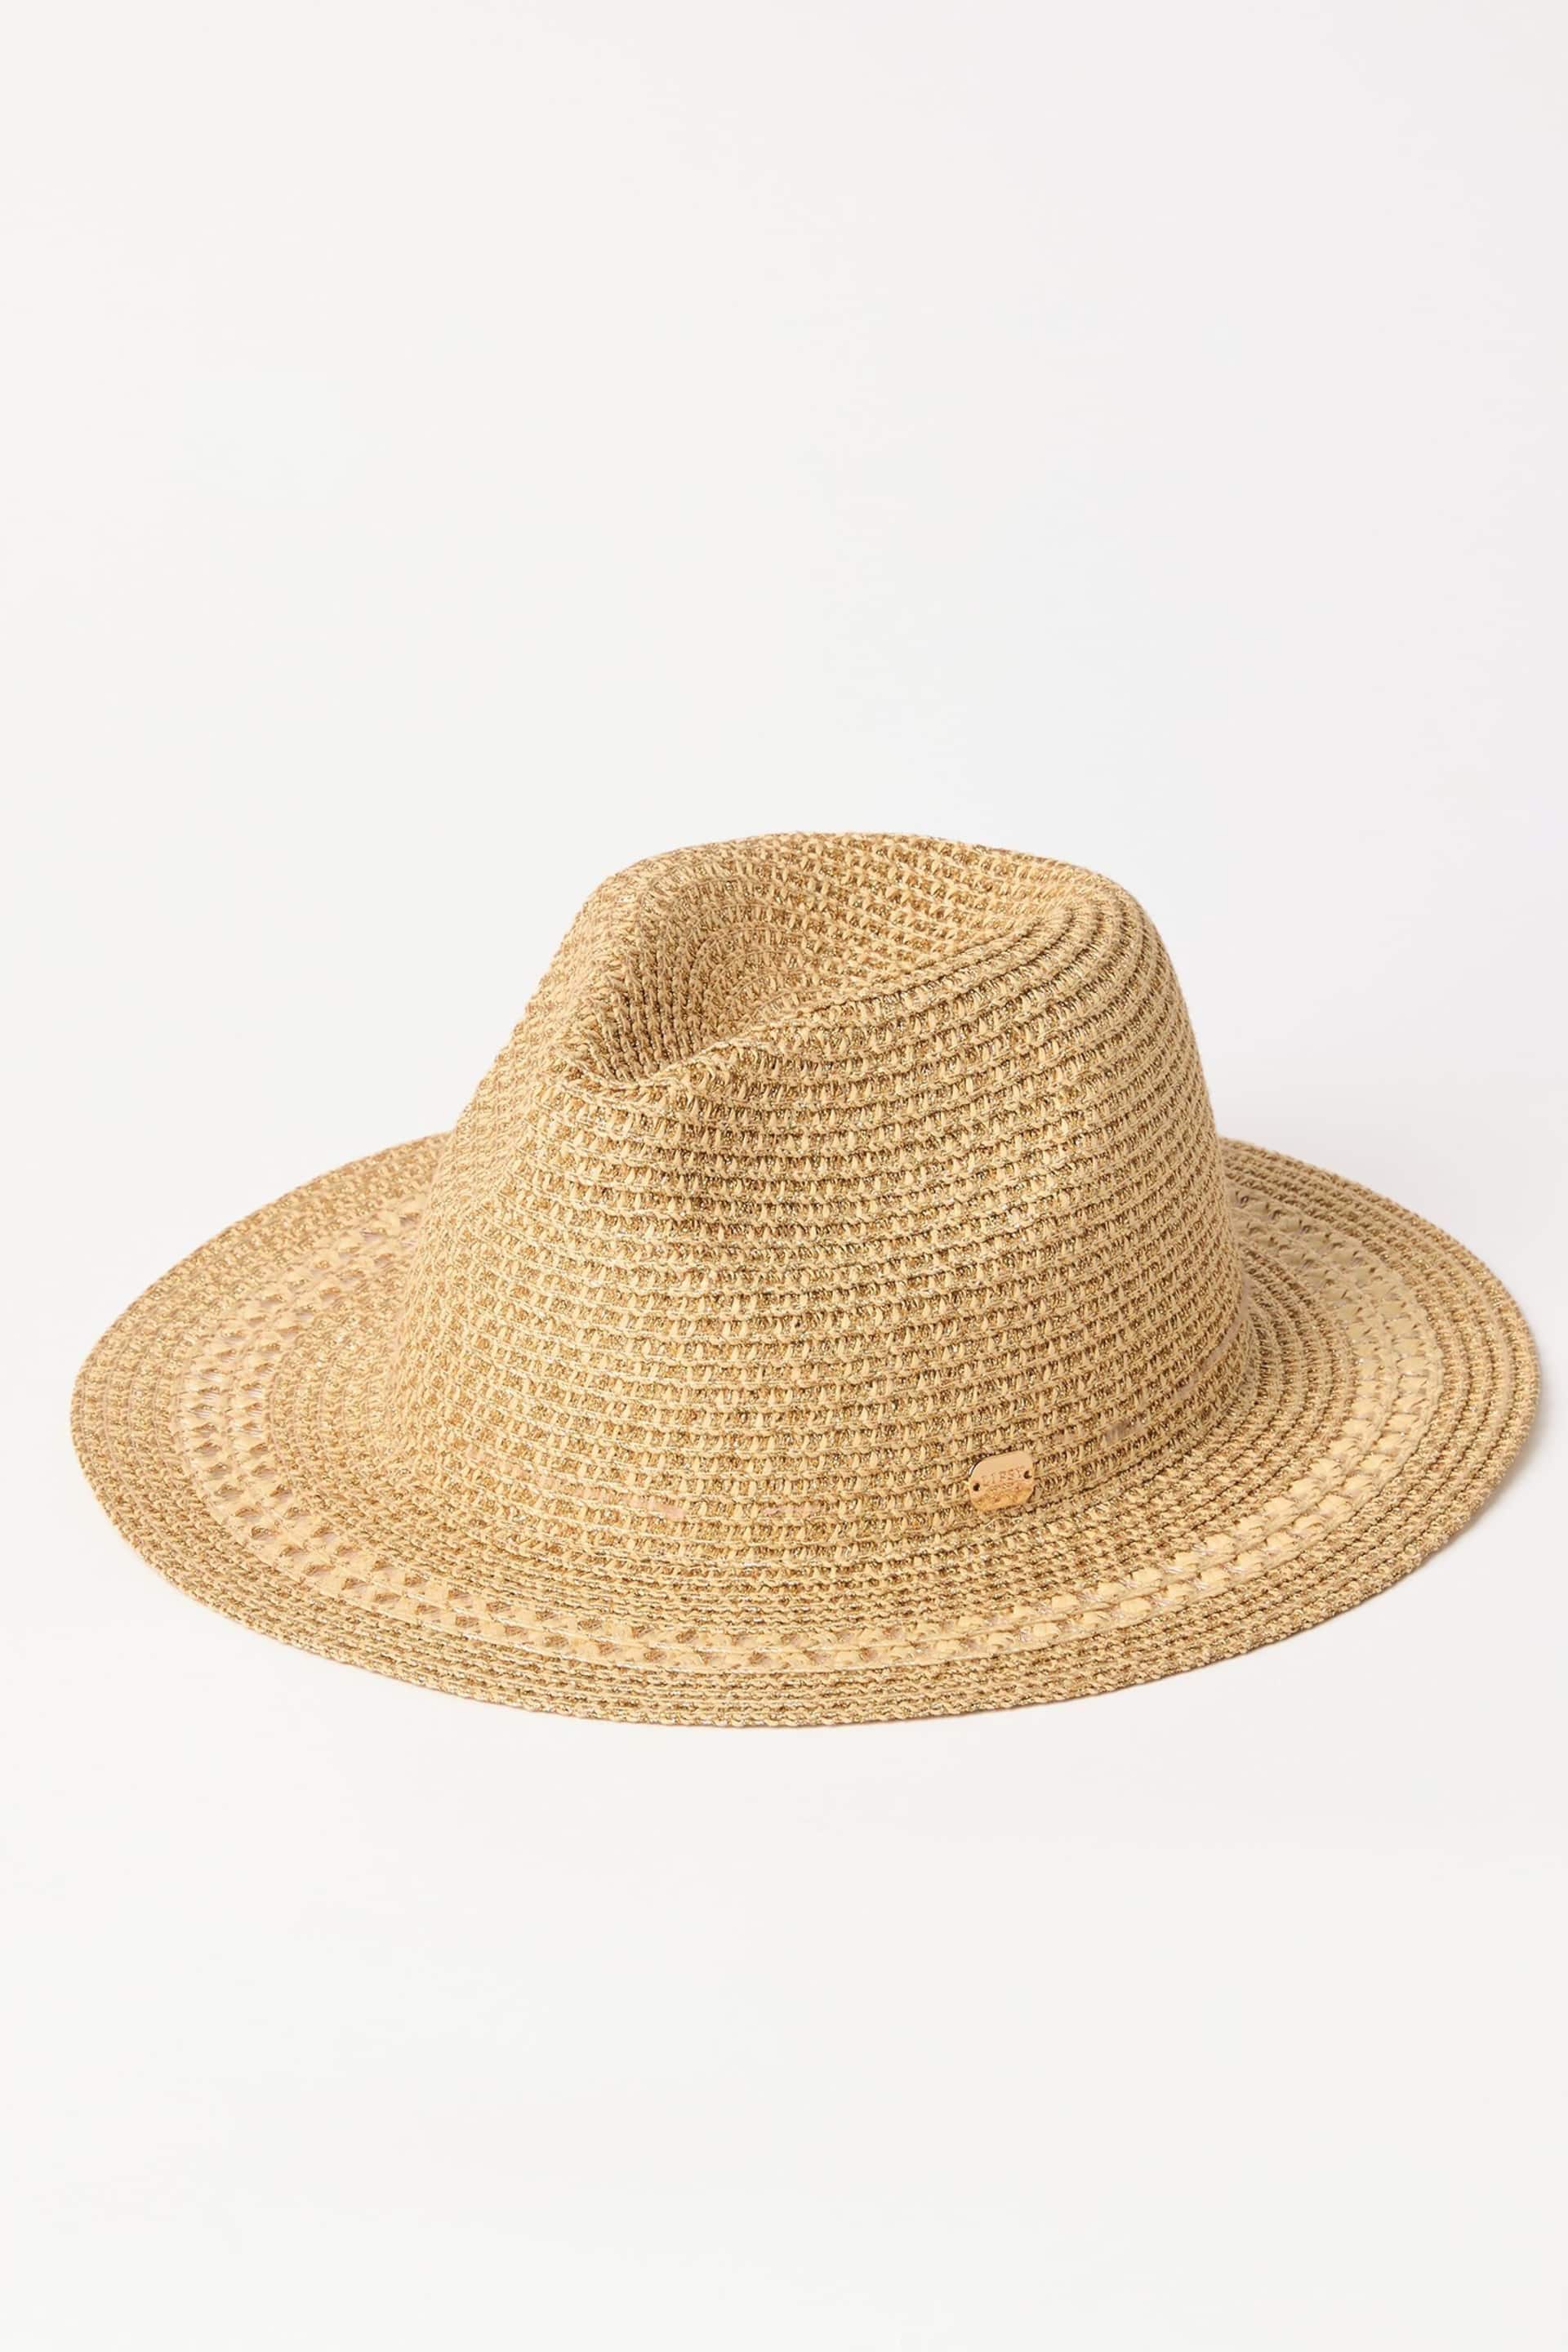 Lipsy Gold Straw Fedora Hat - Image 4 of 6